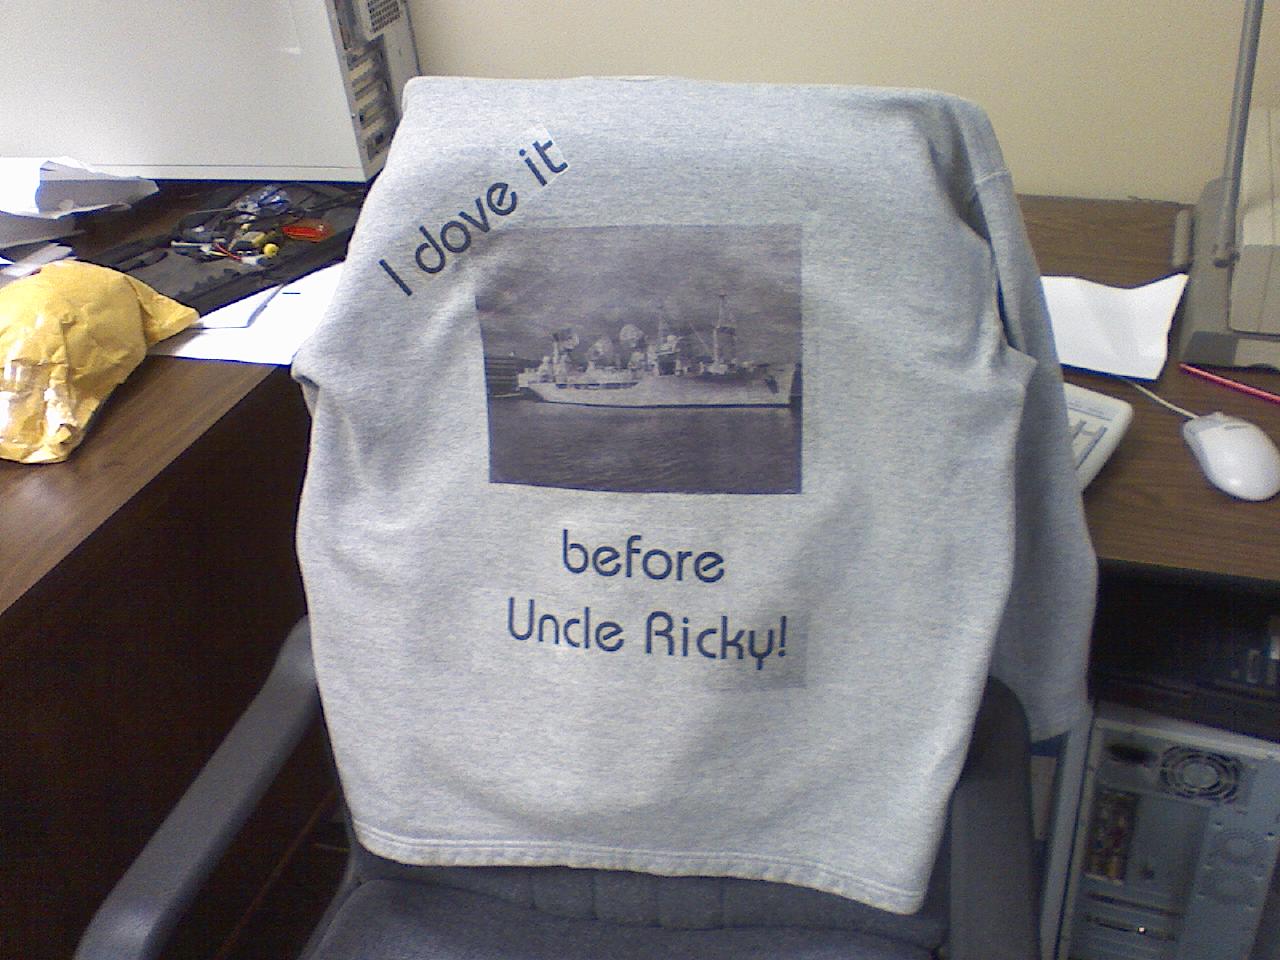 Uncle Ricky